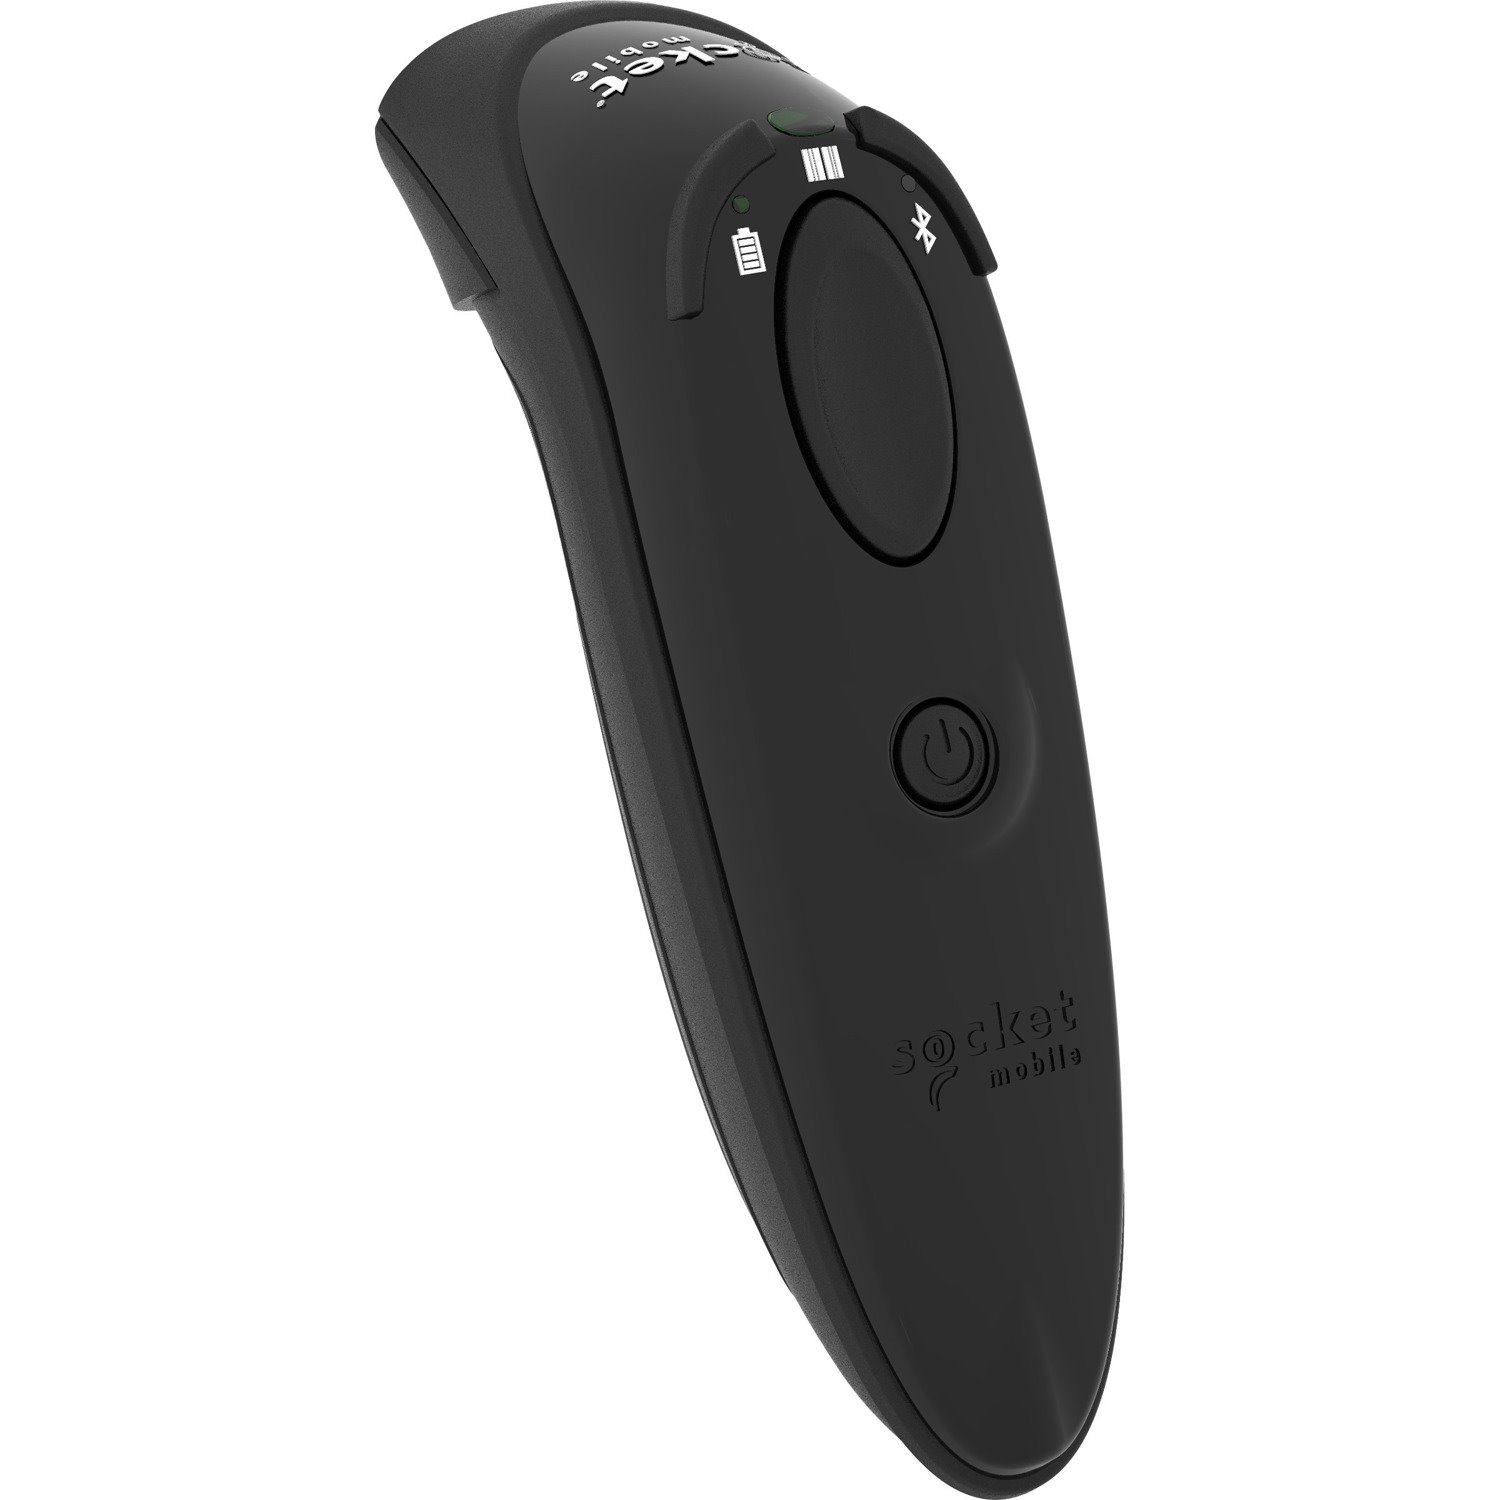 Socket Mobile DuraScan D740 Handheld Barcode Scanner - Wireless Connectivity - Black